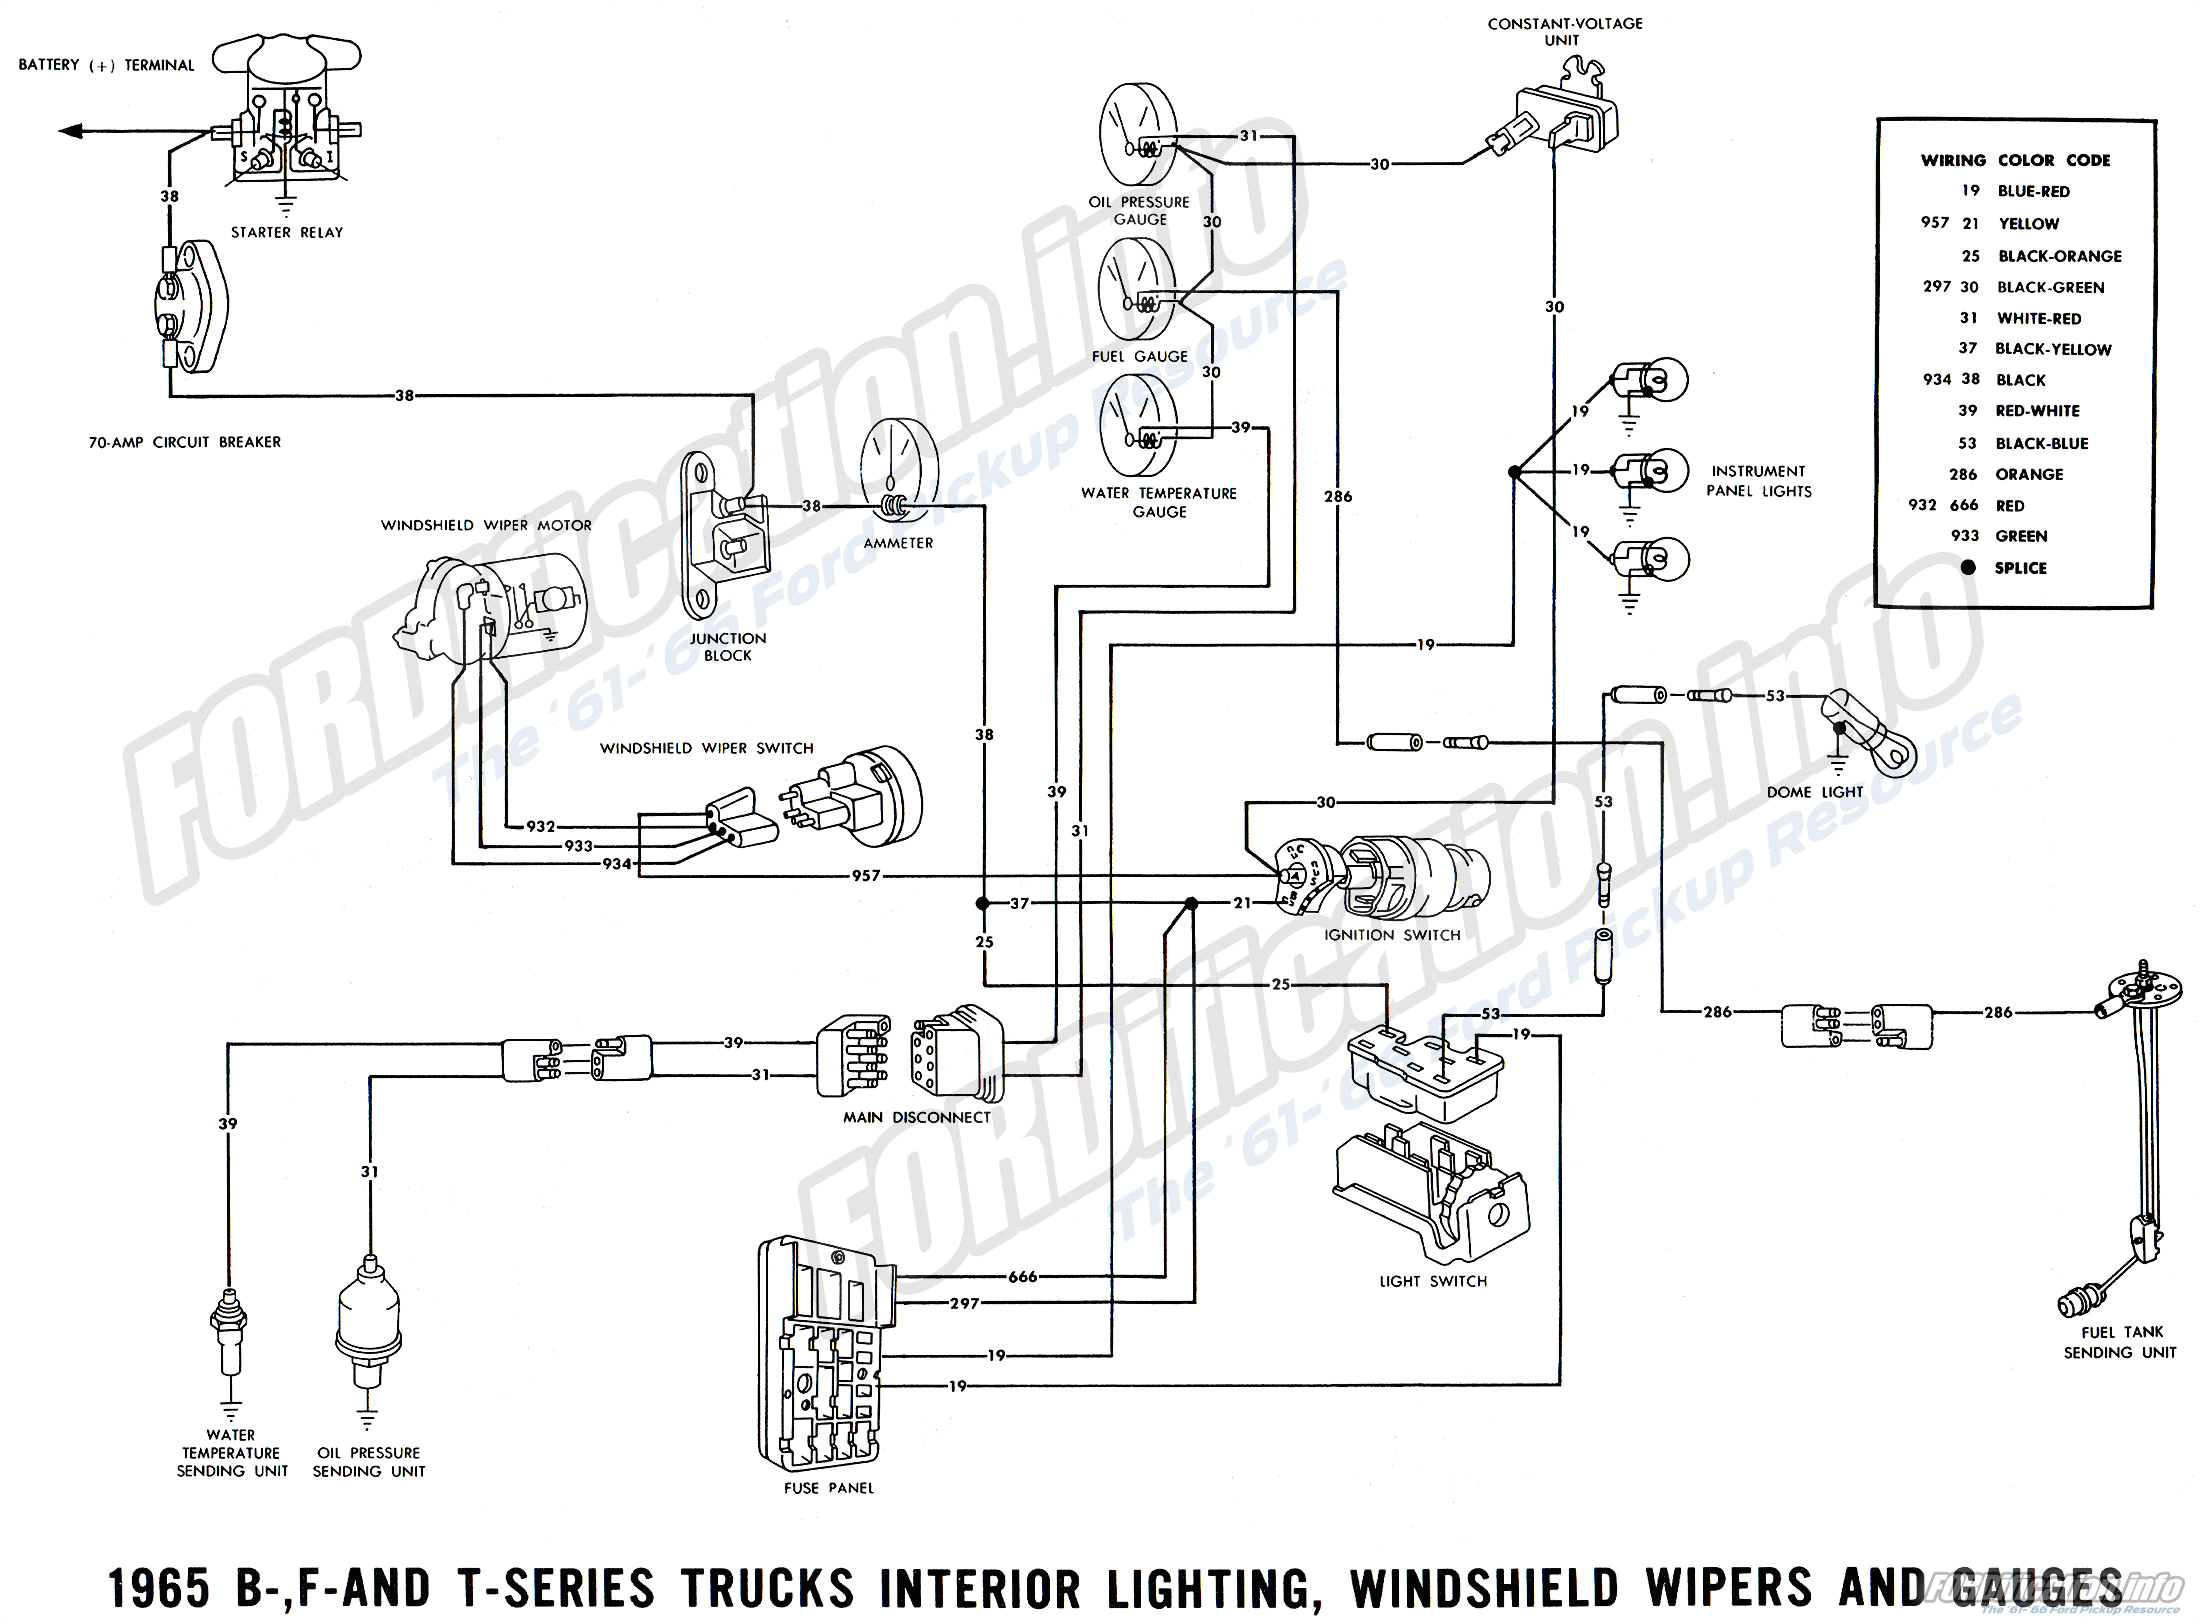 65 ford f100 wiring diagram wiring diagram db wiring diagram for 65 ford f100 65 ford